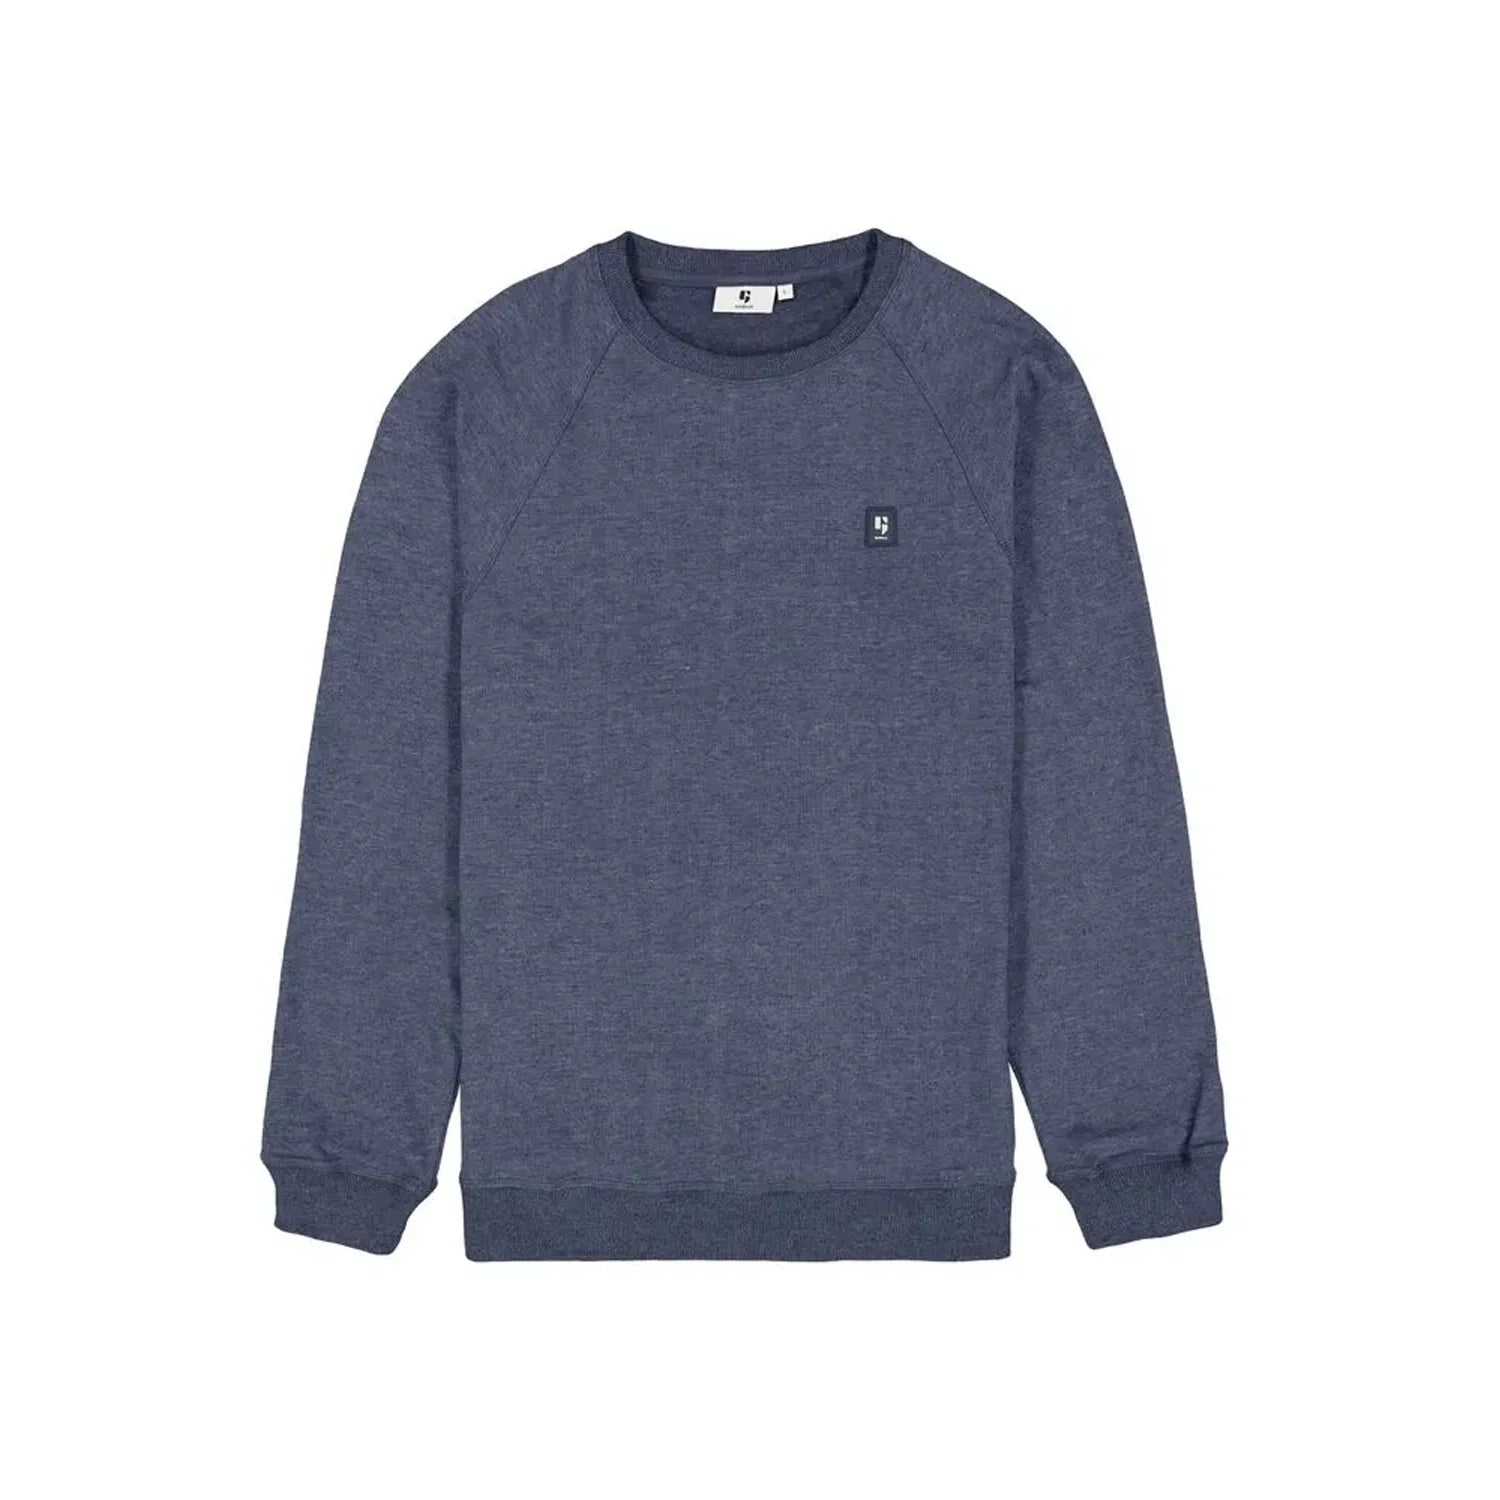 'Garcia I31215 Dark Moon Knit Sweater' in 'Dark Moon' colour